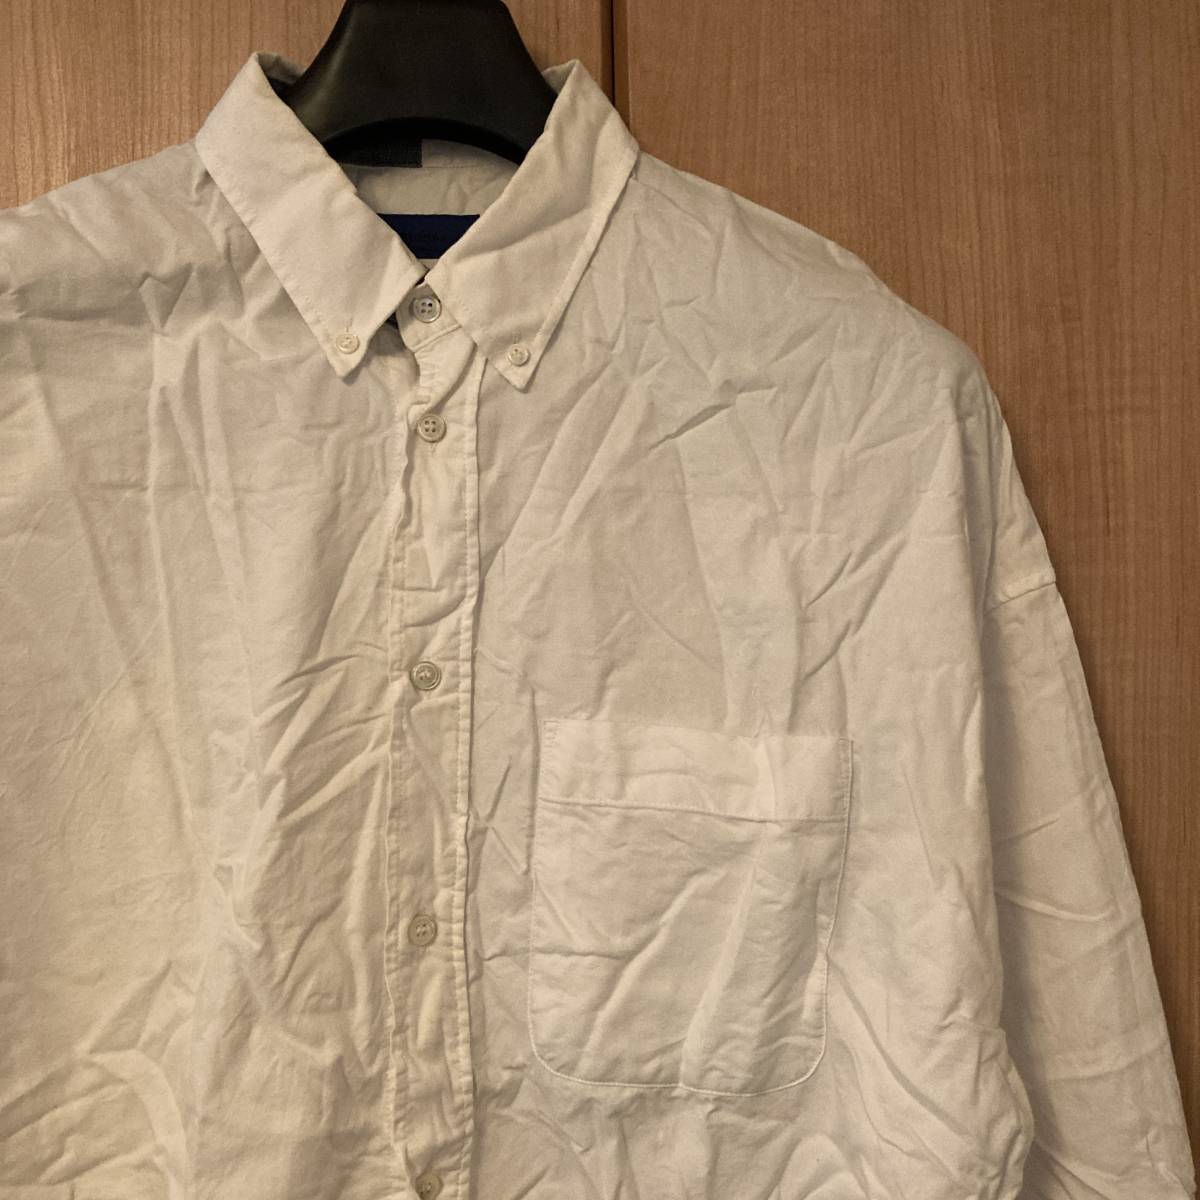 size M | etudes | ロング丈 ビッグサイズ コットン ポケット シャツ | ホワイト | エチュード | COTTON POCKET SHIRT | WHITE 白 |_画像1